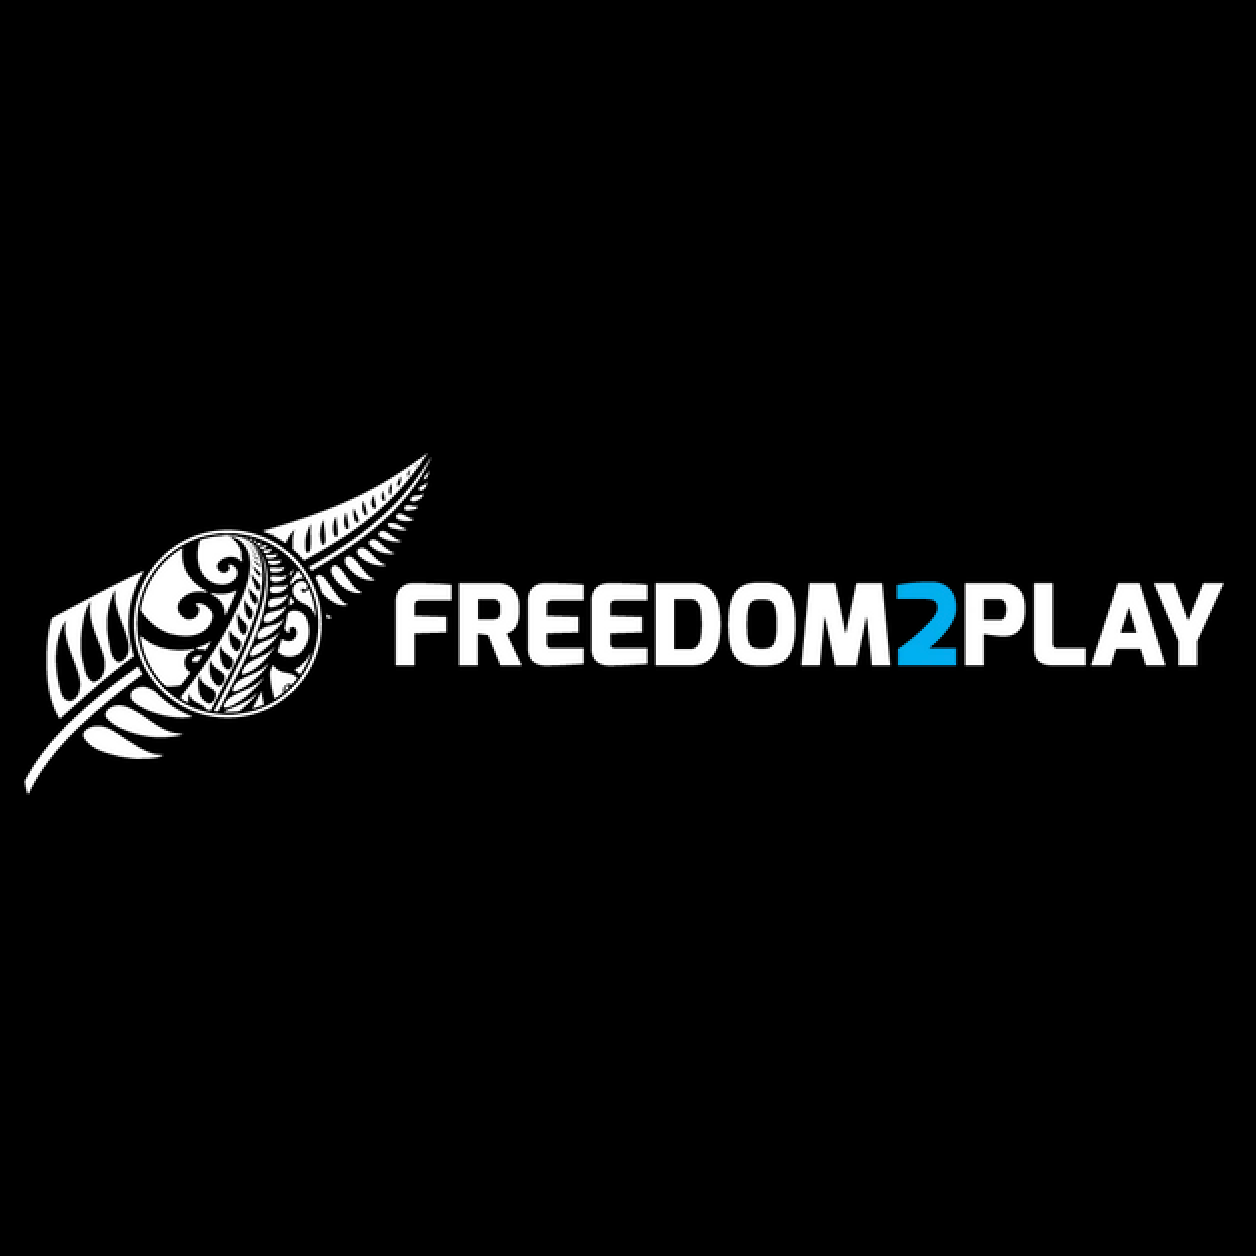 Freedom2play